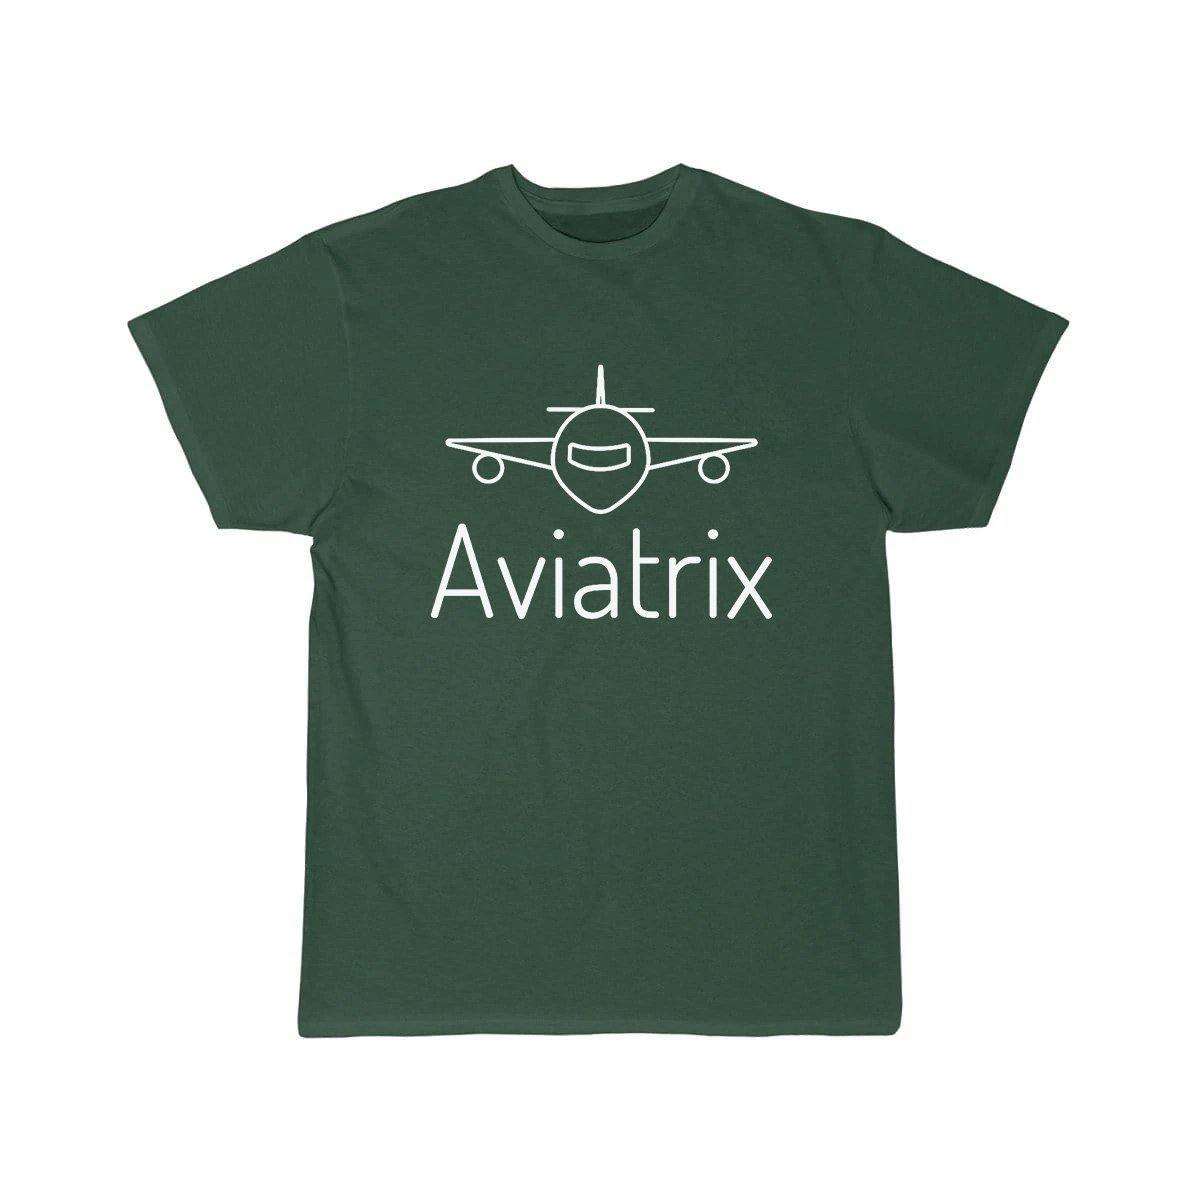 AVIATRIX AND AIRPLANES T-SHIRT THE AV8R